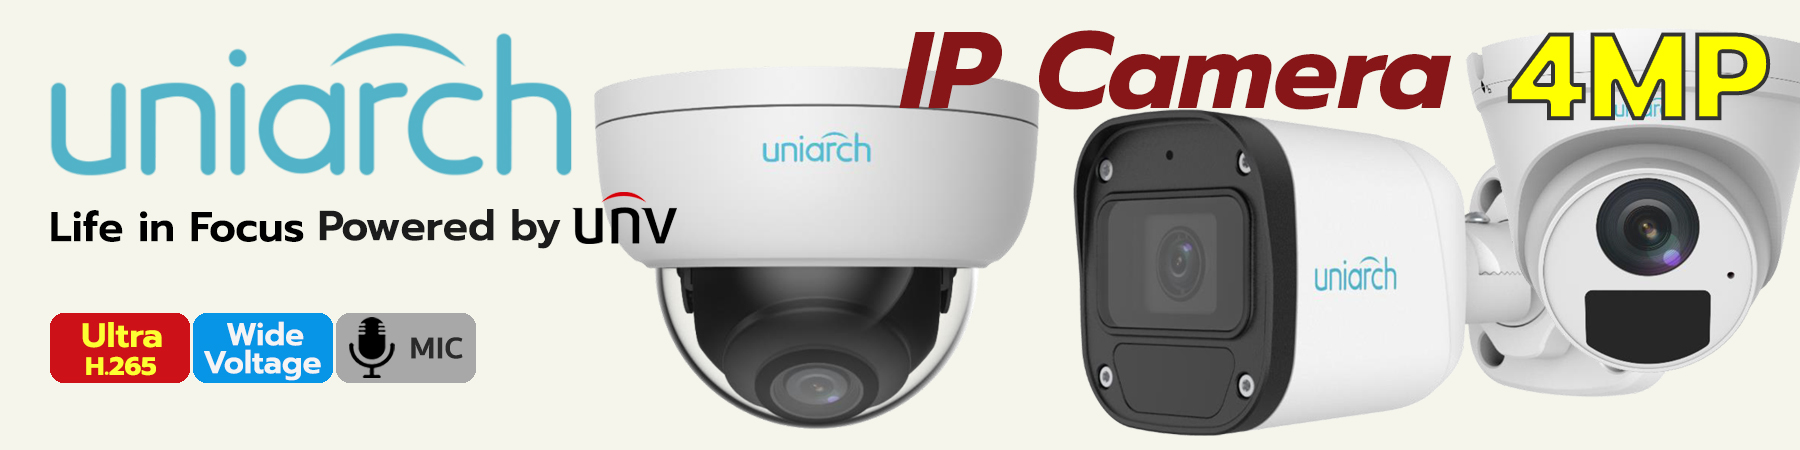 Uniarch IPC, Uniarch IP Camera, กล้องวงจรปิด Uniarch, IPC-B124-APF28, IPC-B124-APF40, IPC-T124-APF28, IPC-T124-APF40, IPC-D124-PF28, IPC-D124-PF40, IPC-B314-APKZ, IPC-D314-APKZ